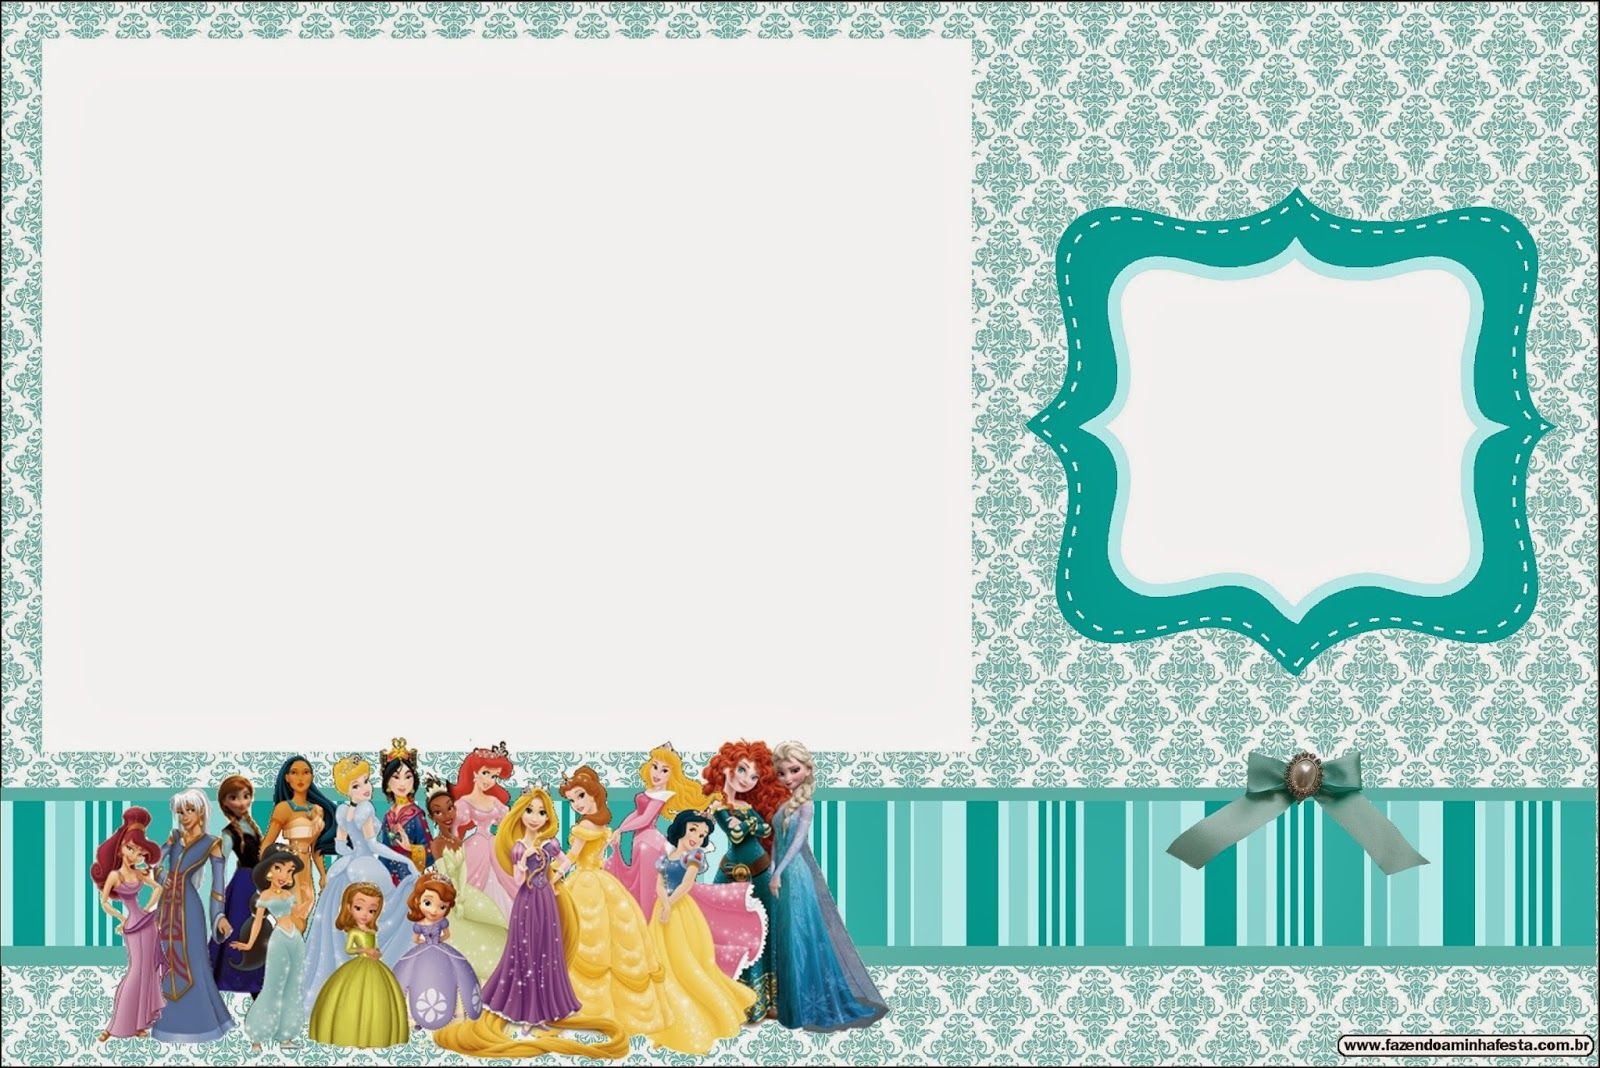 All Disney Princess: Free Printable Invitations. | Party Planner - Disney Princess Free Printable Invitations